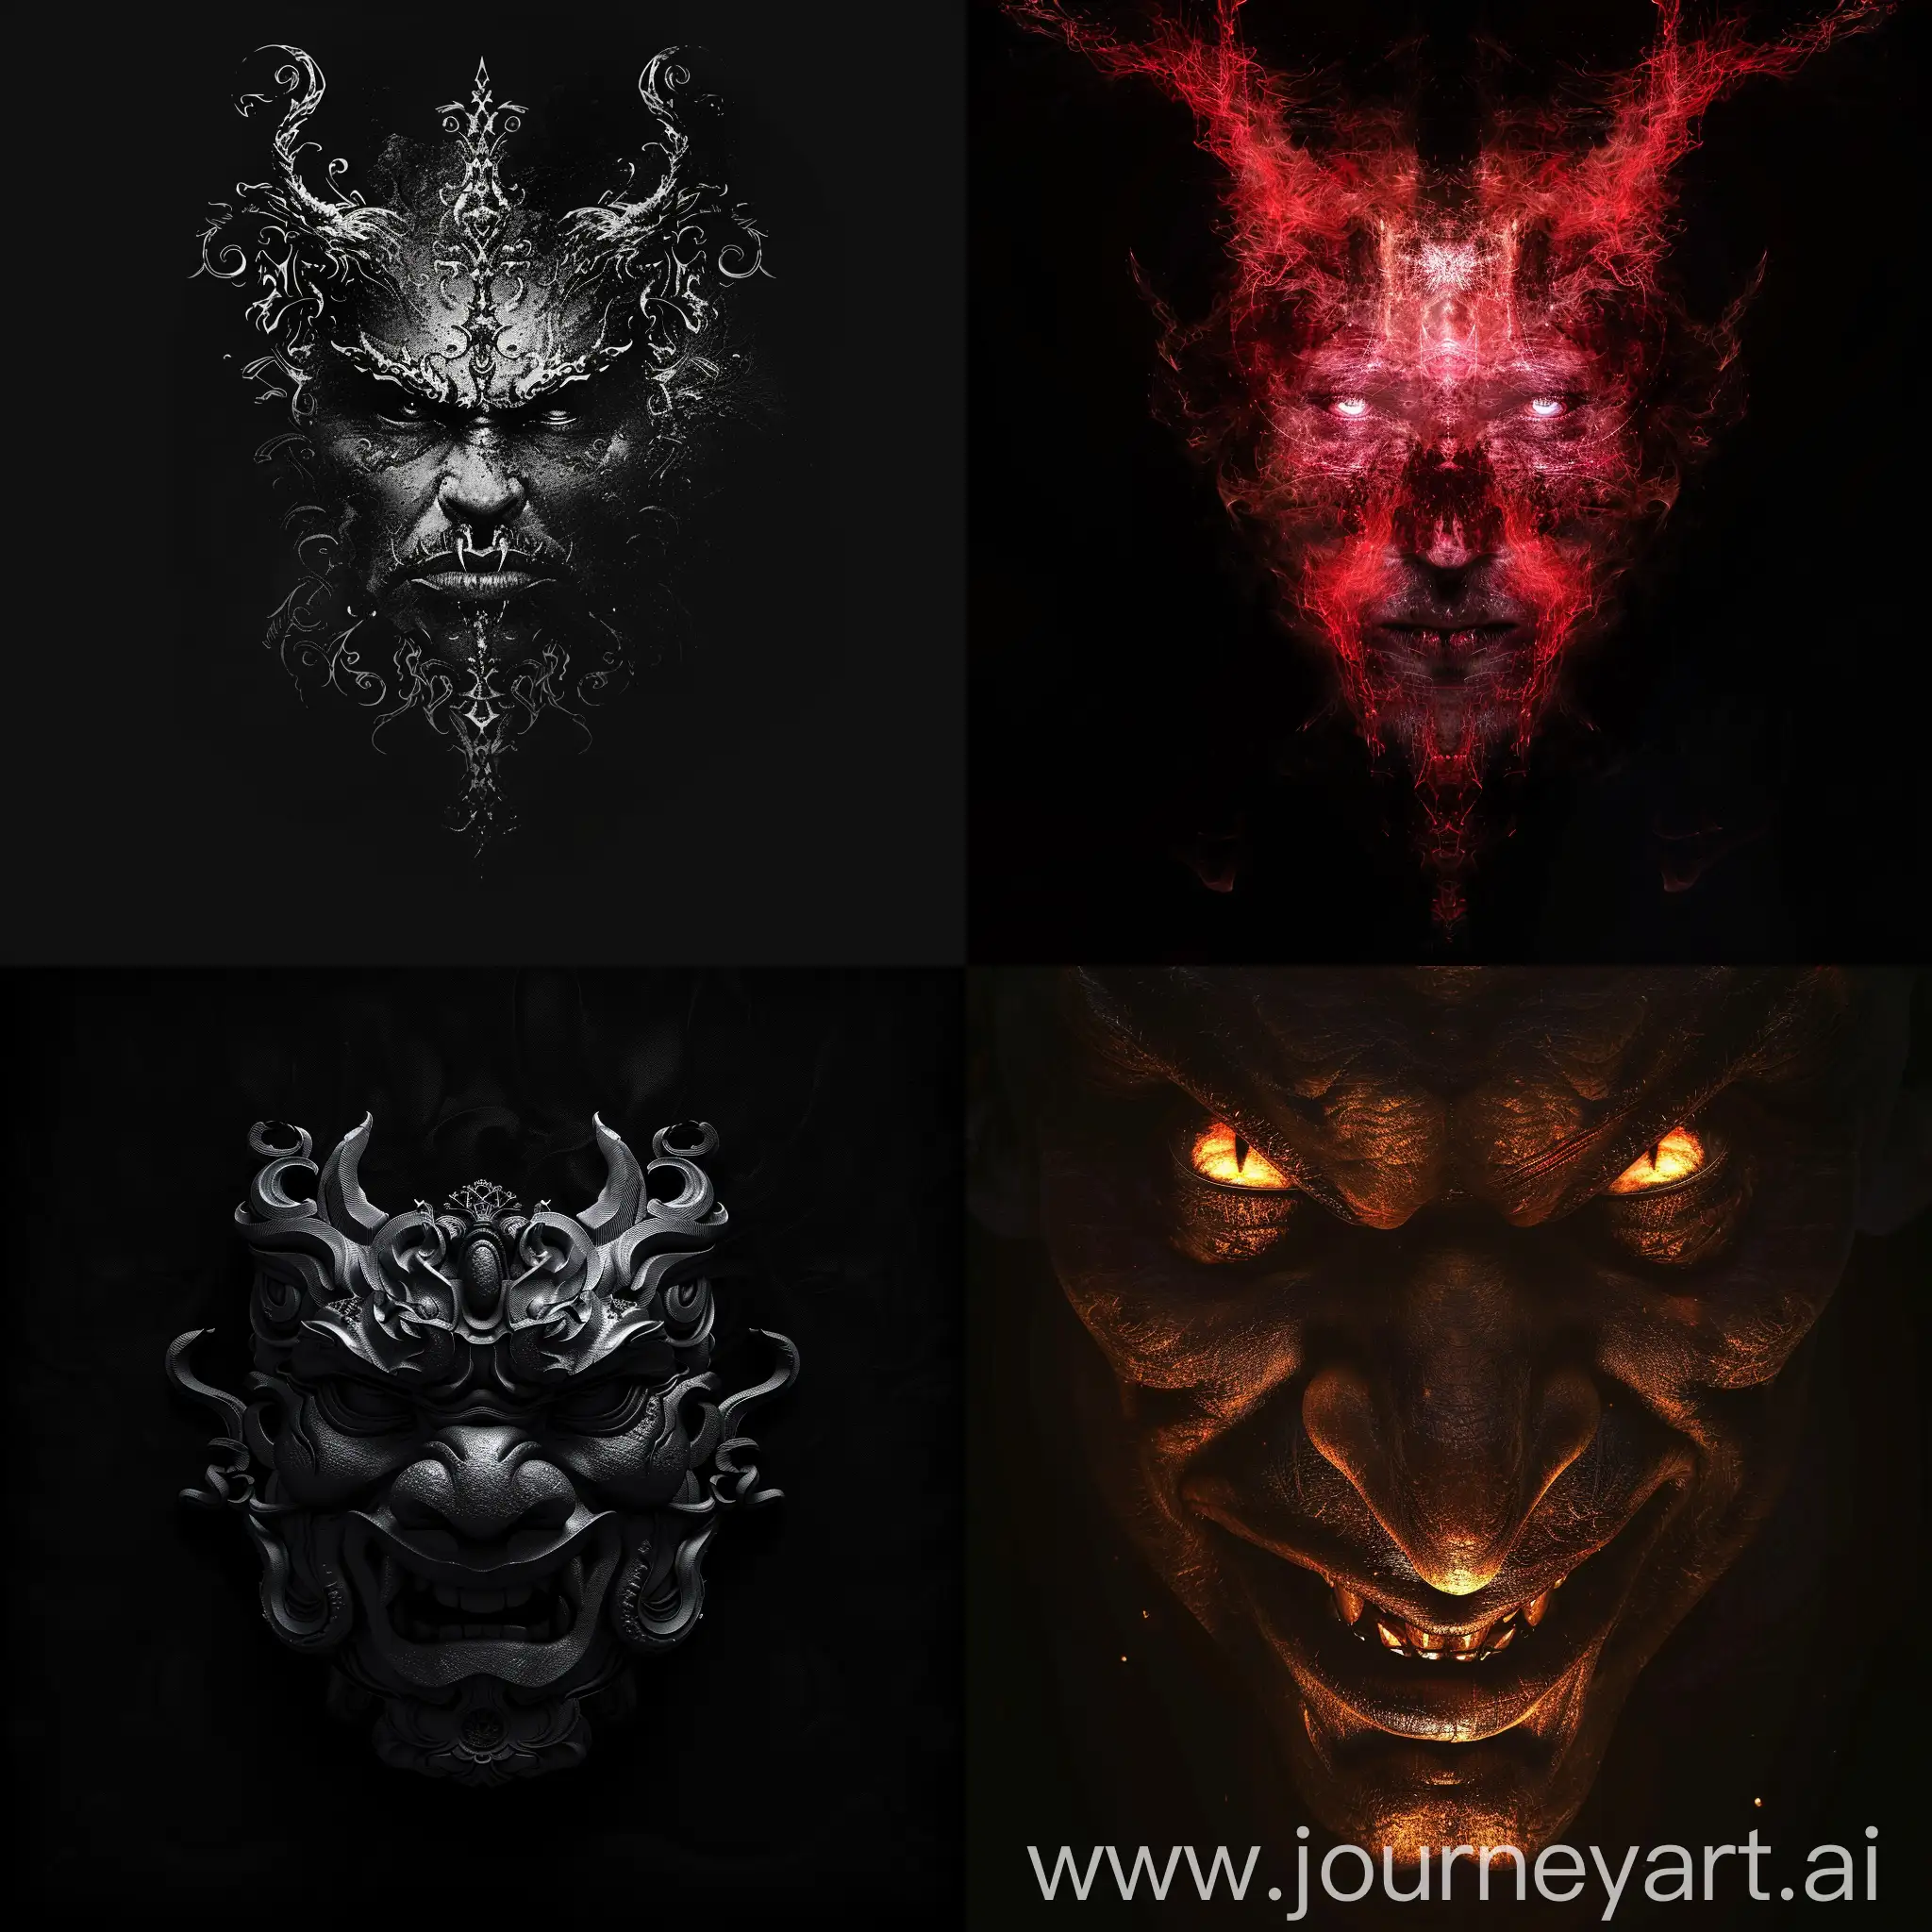 Surreal-Demonic-Face-Eerie-Portrait-on-Black-Background